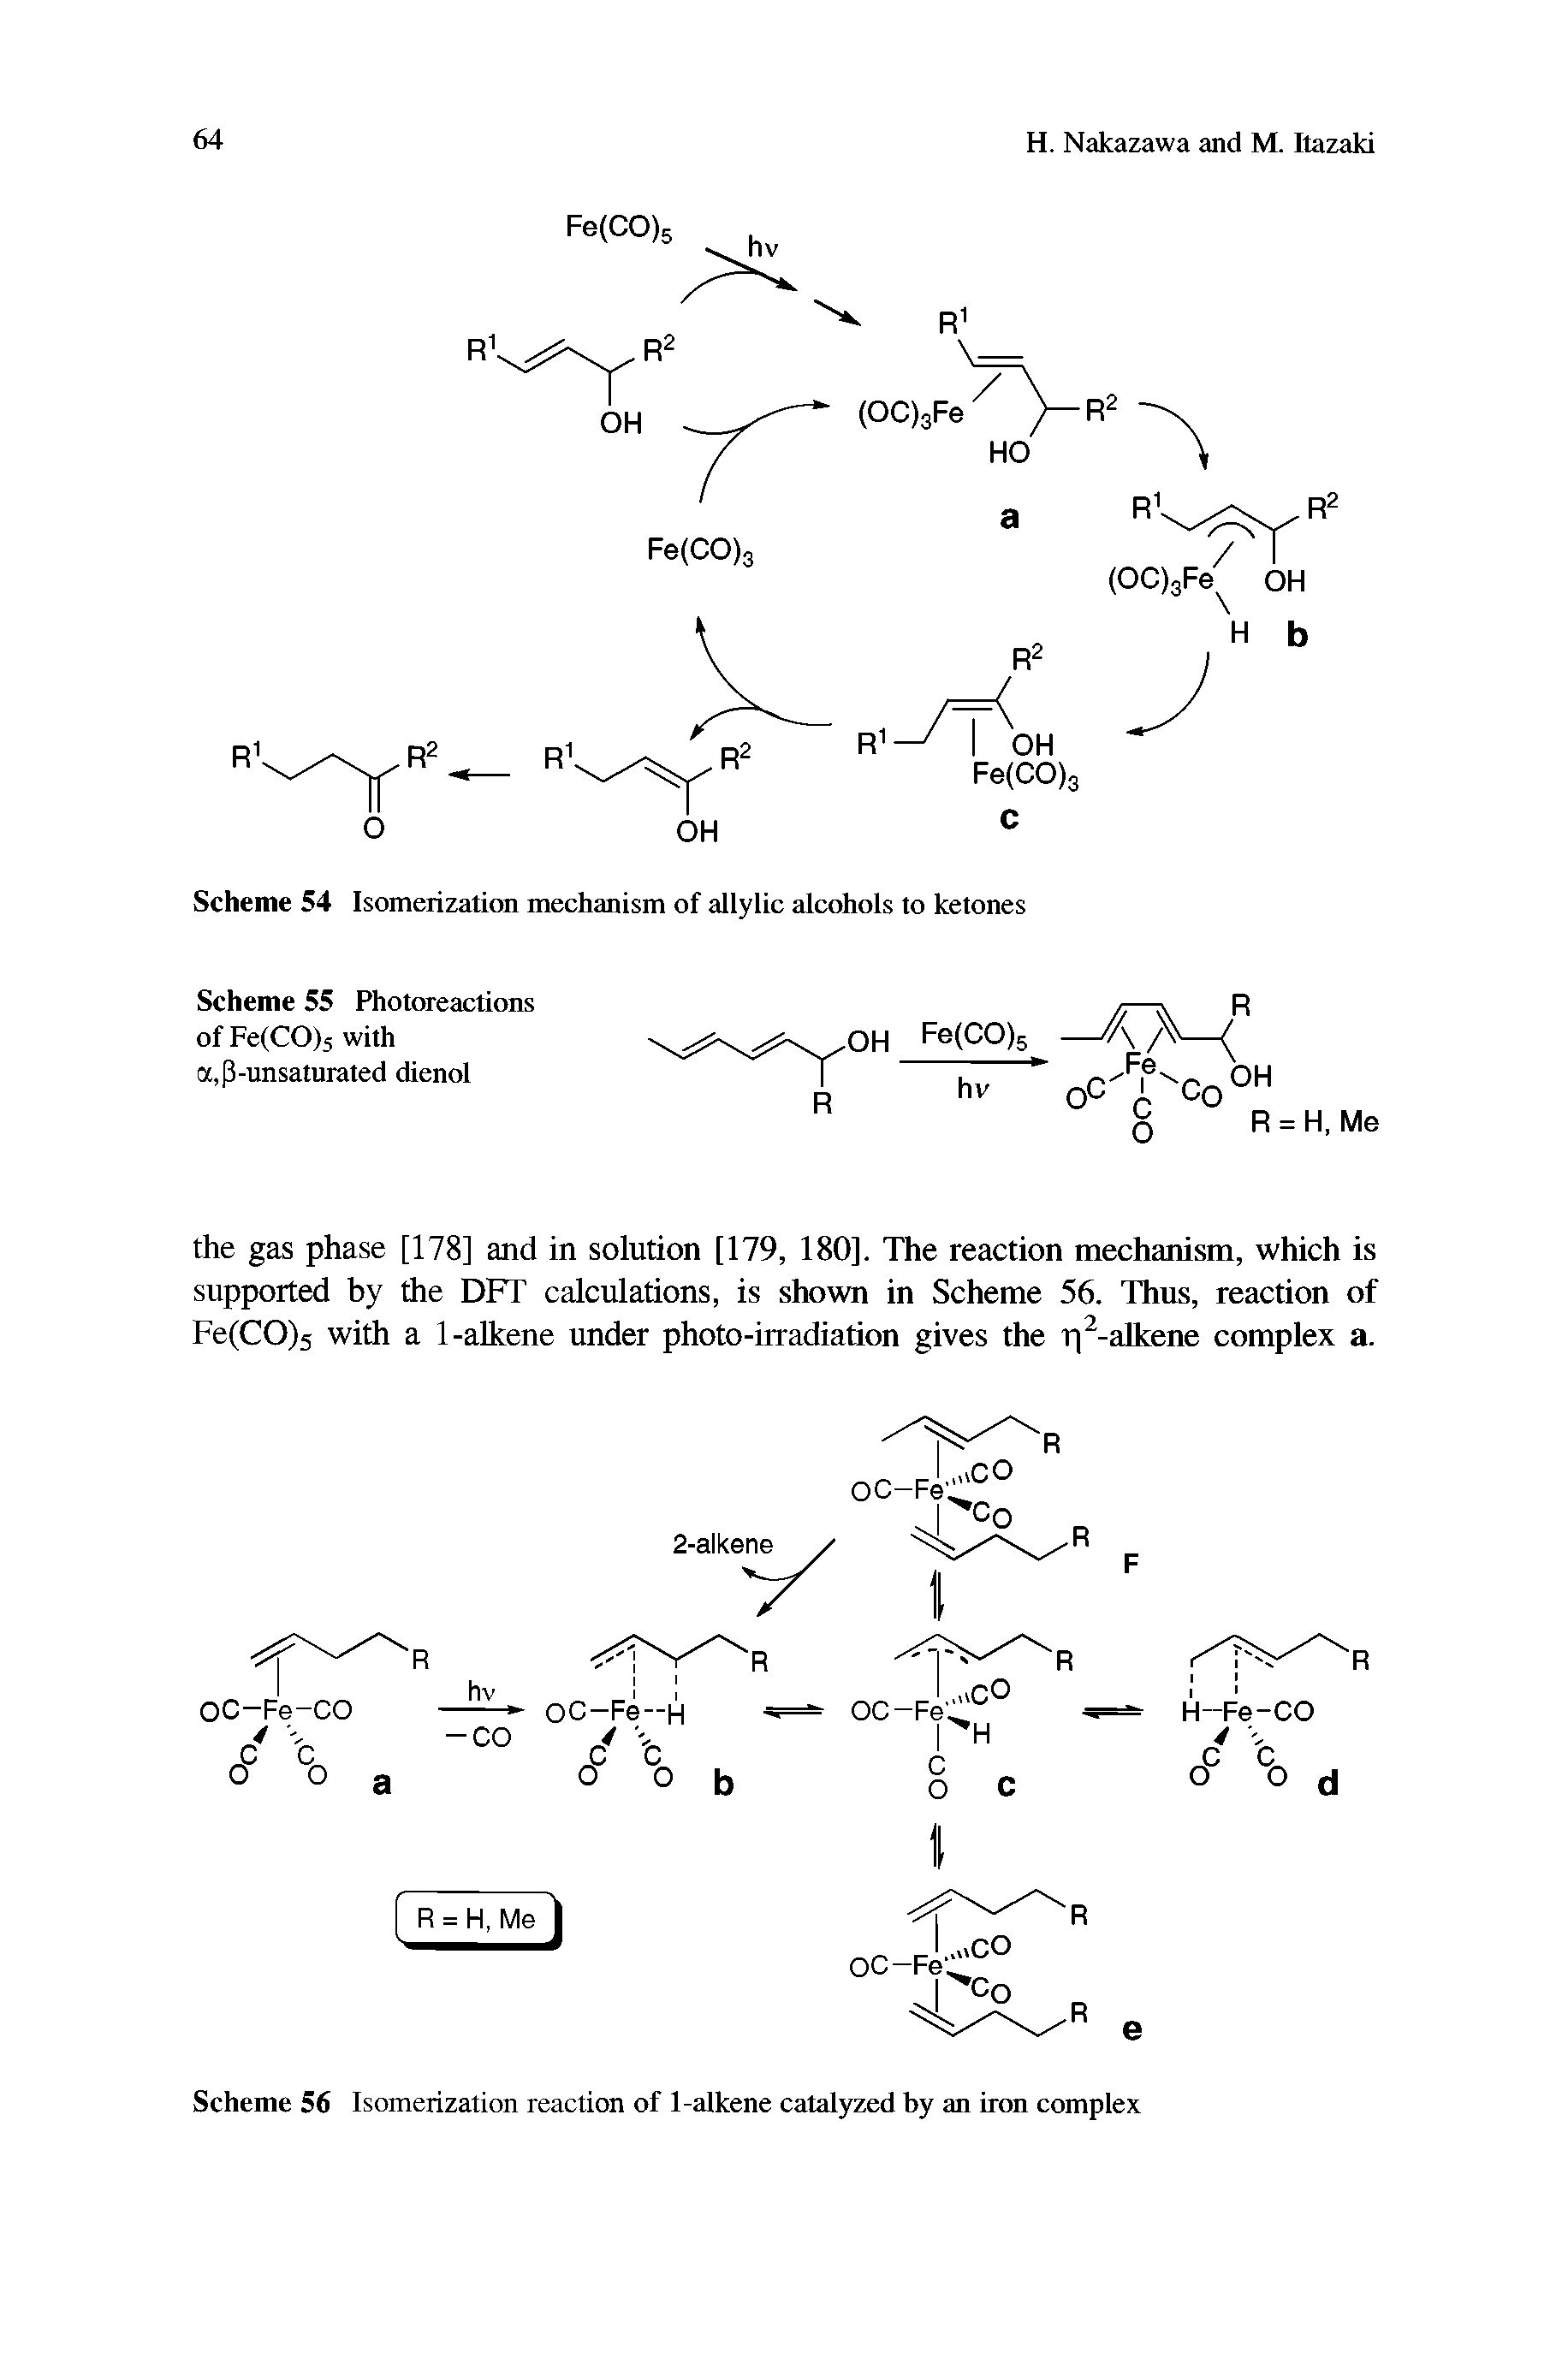 Scheme 56 Isomerization reaction of 1-alkene catalyzed by an iron complex...